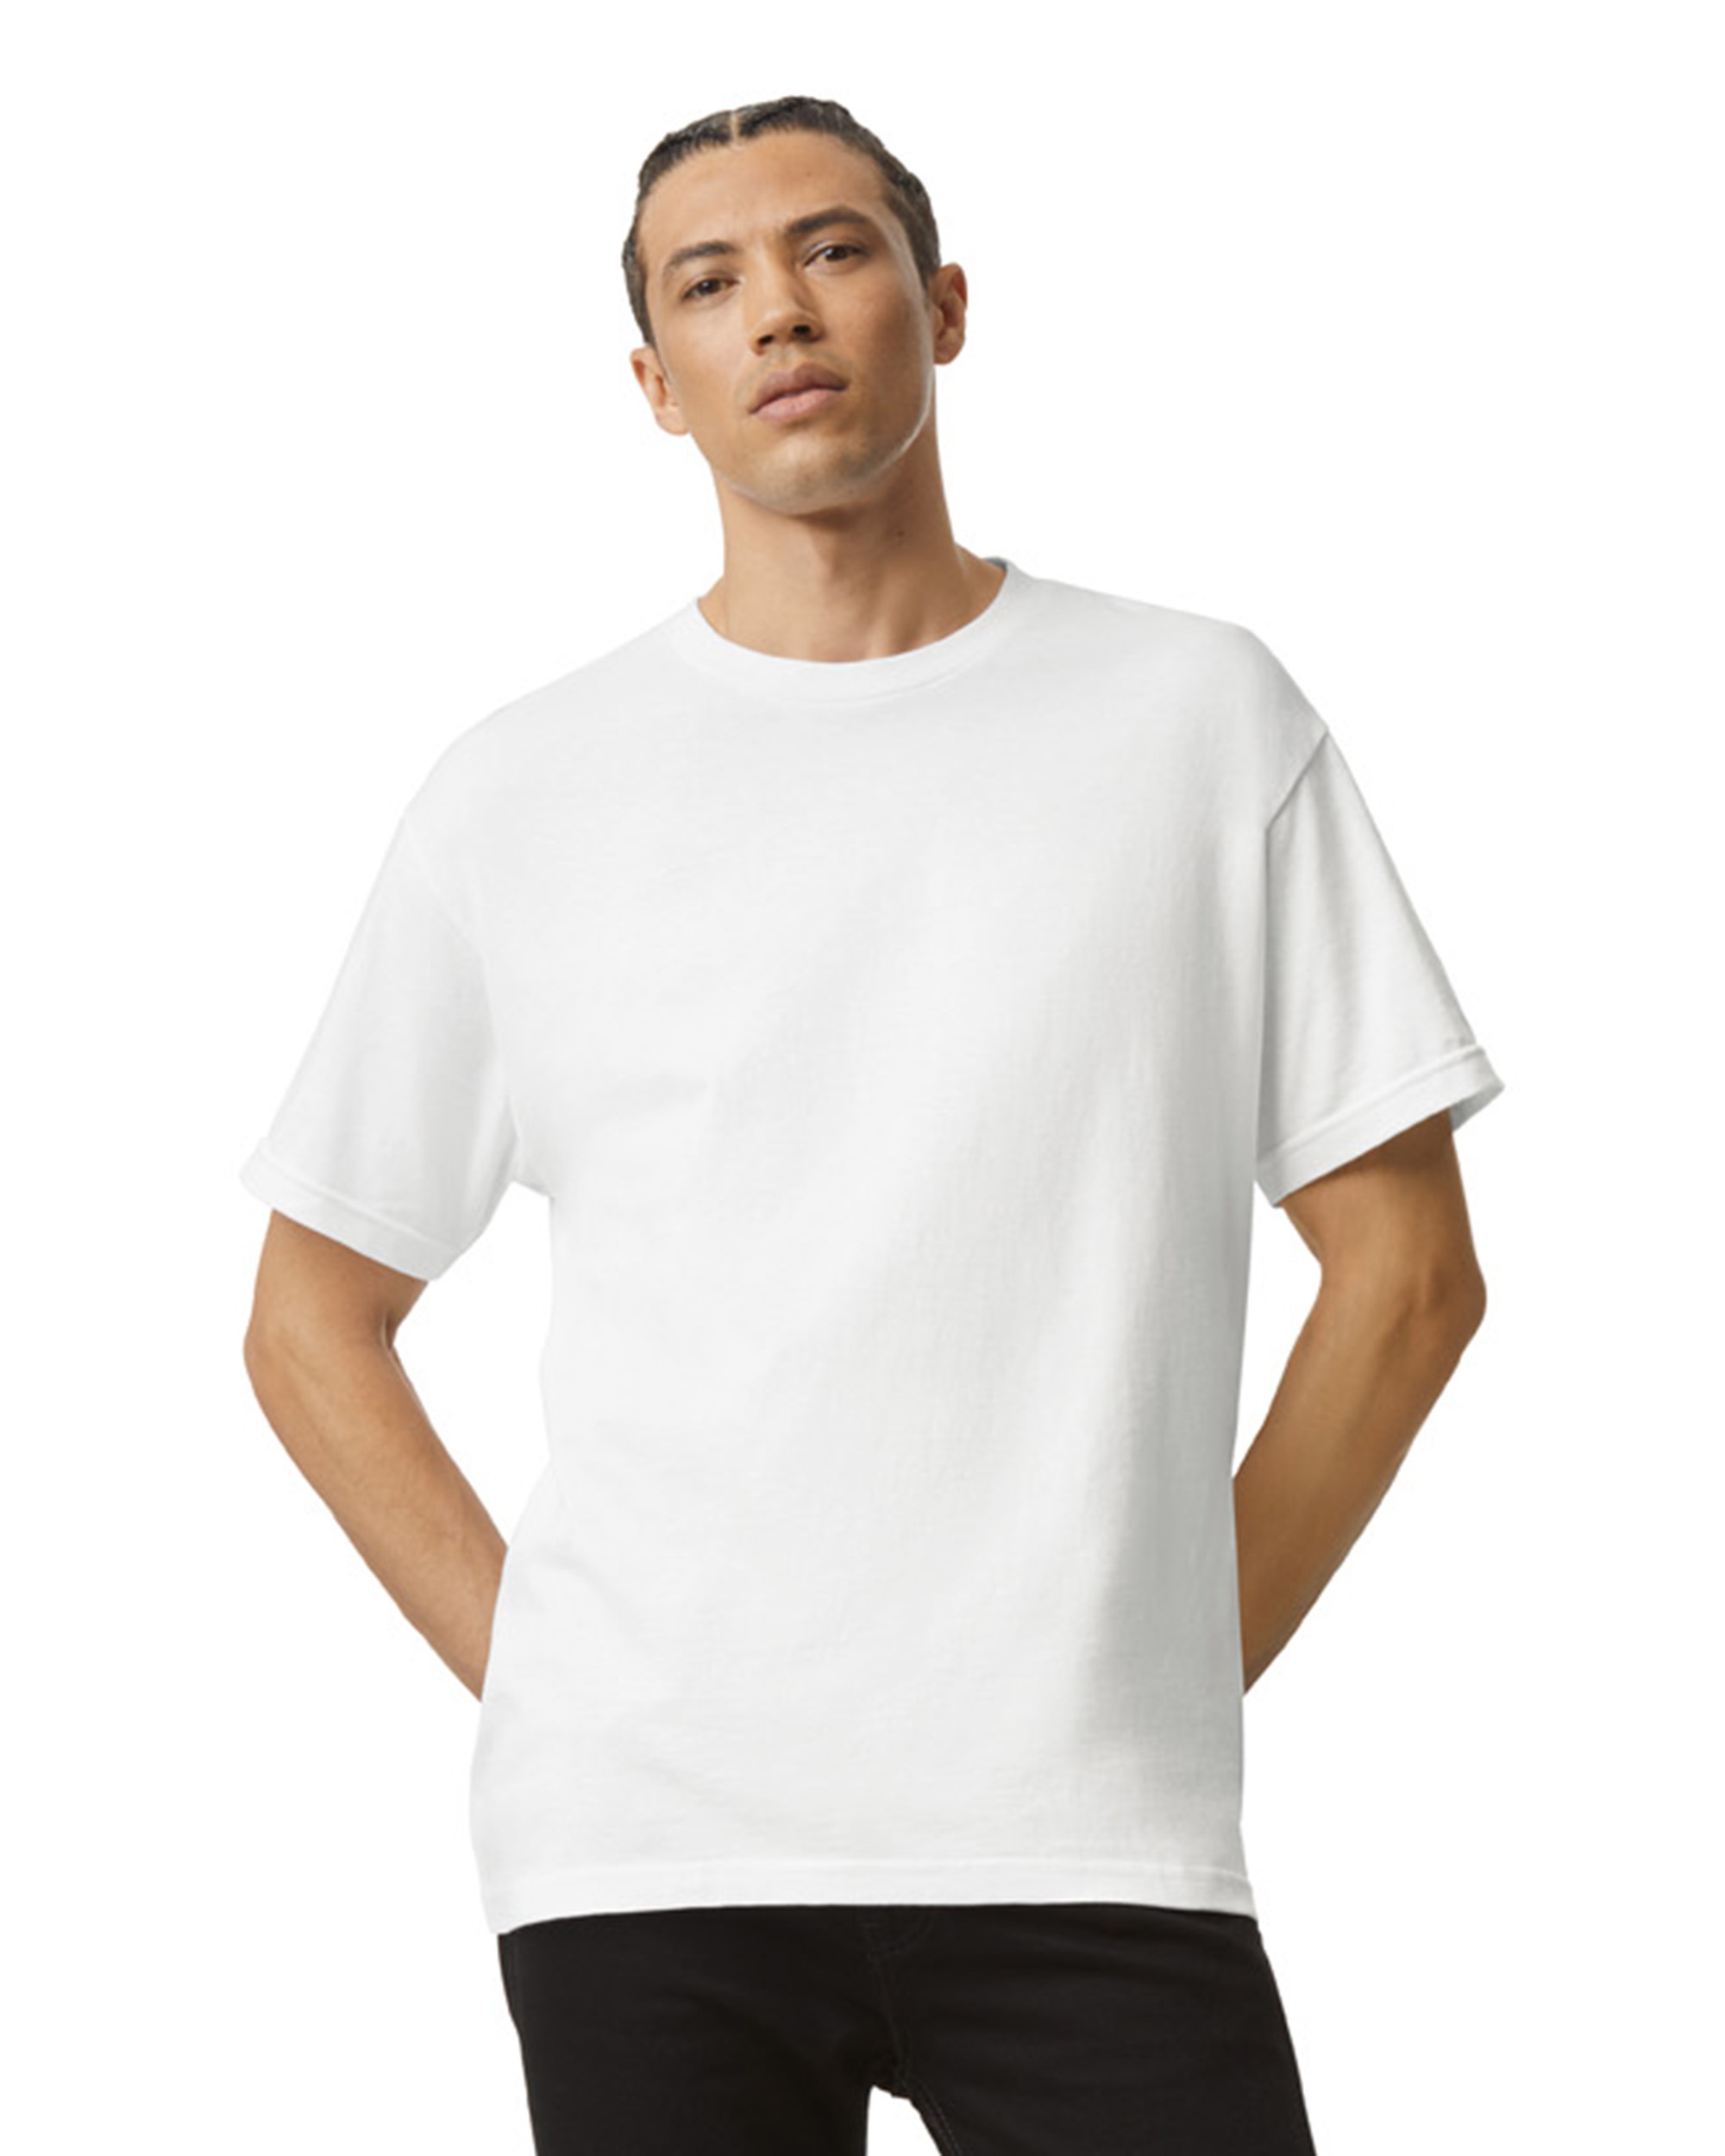 American Apparel® 1301 Heavyweight Cotton Unisex T-Shirt